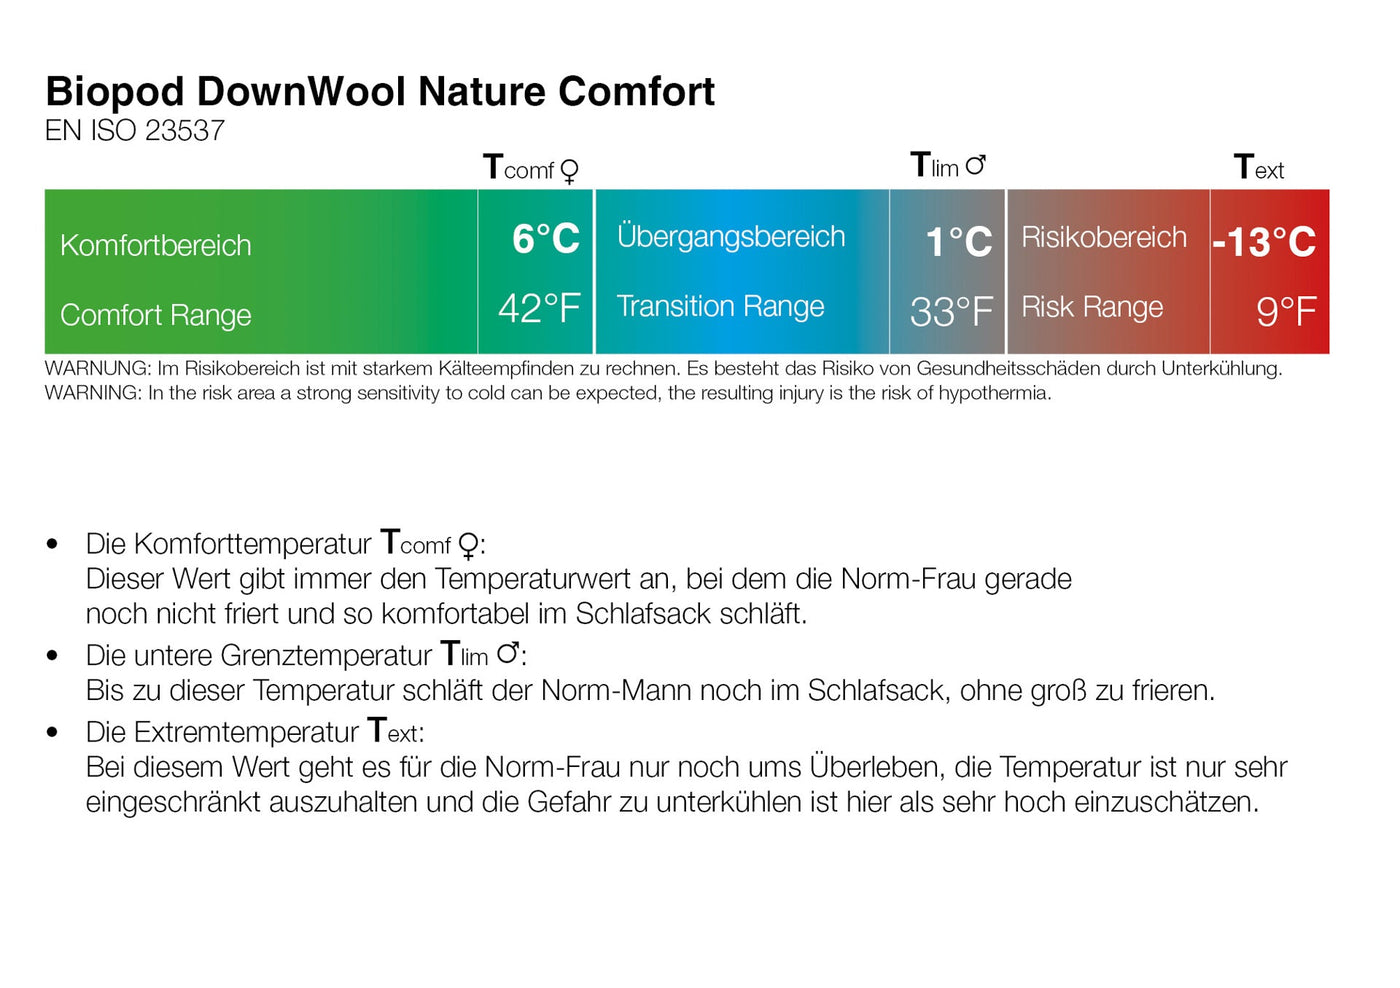 Grüezi bag Deckenschlafsack Biopod DownWool Nature Comfort - Temperaturangaben